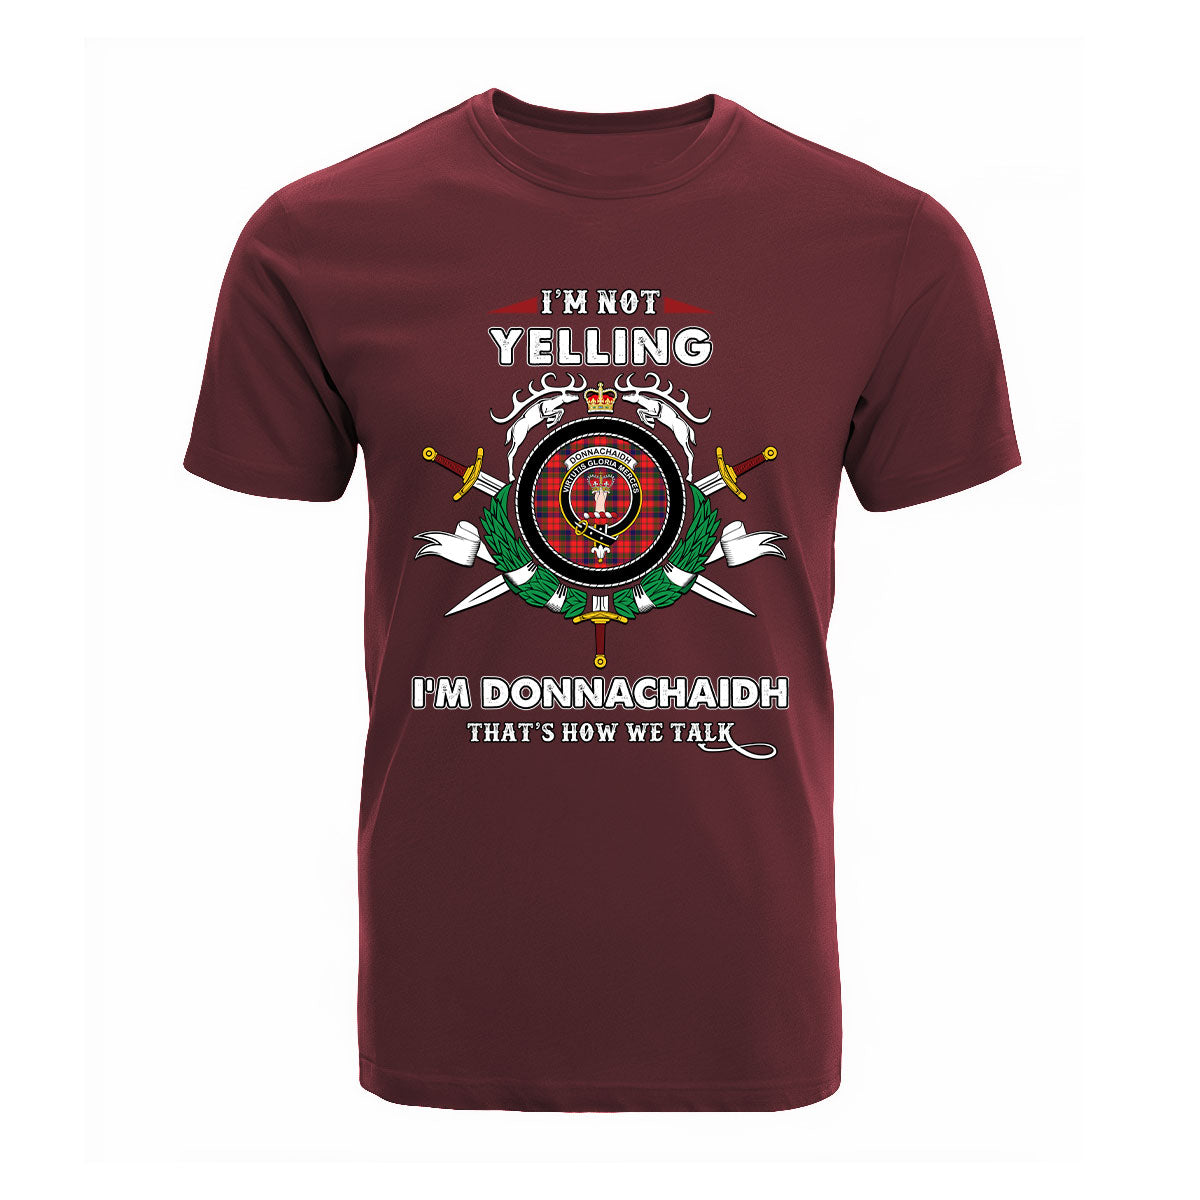 Donnachaidh Tartan Crest T-shirt - I'm not yelling style